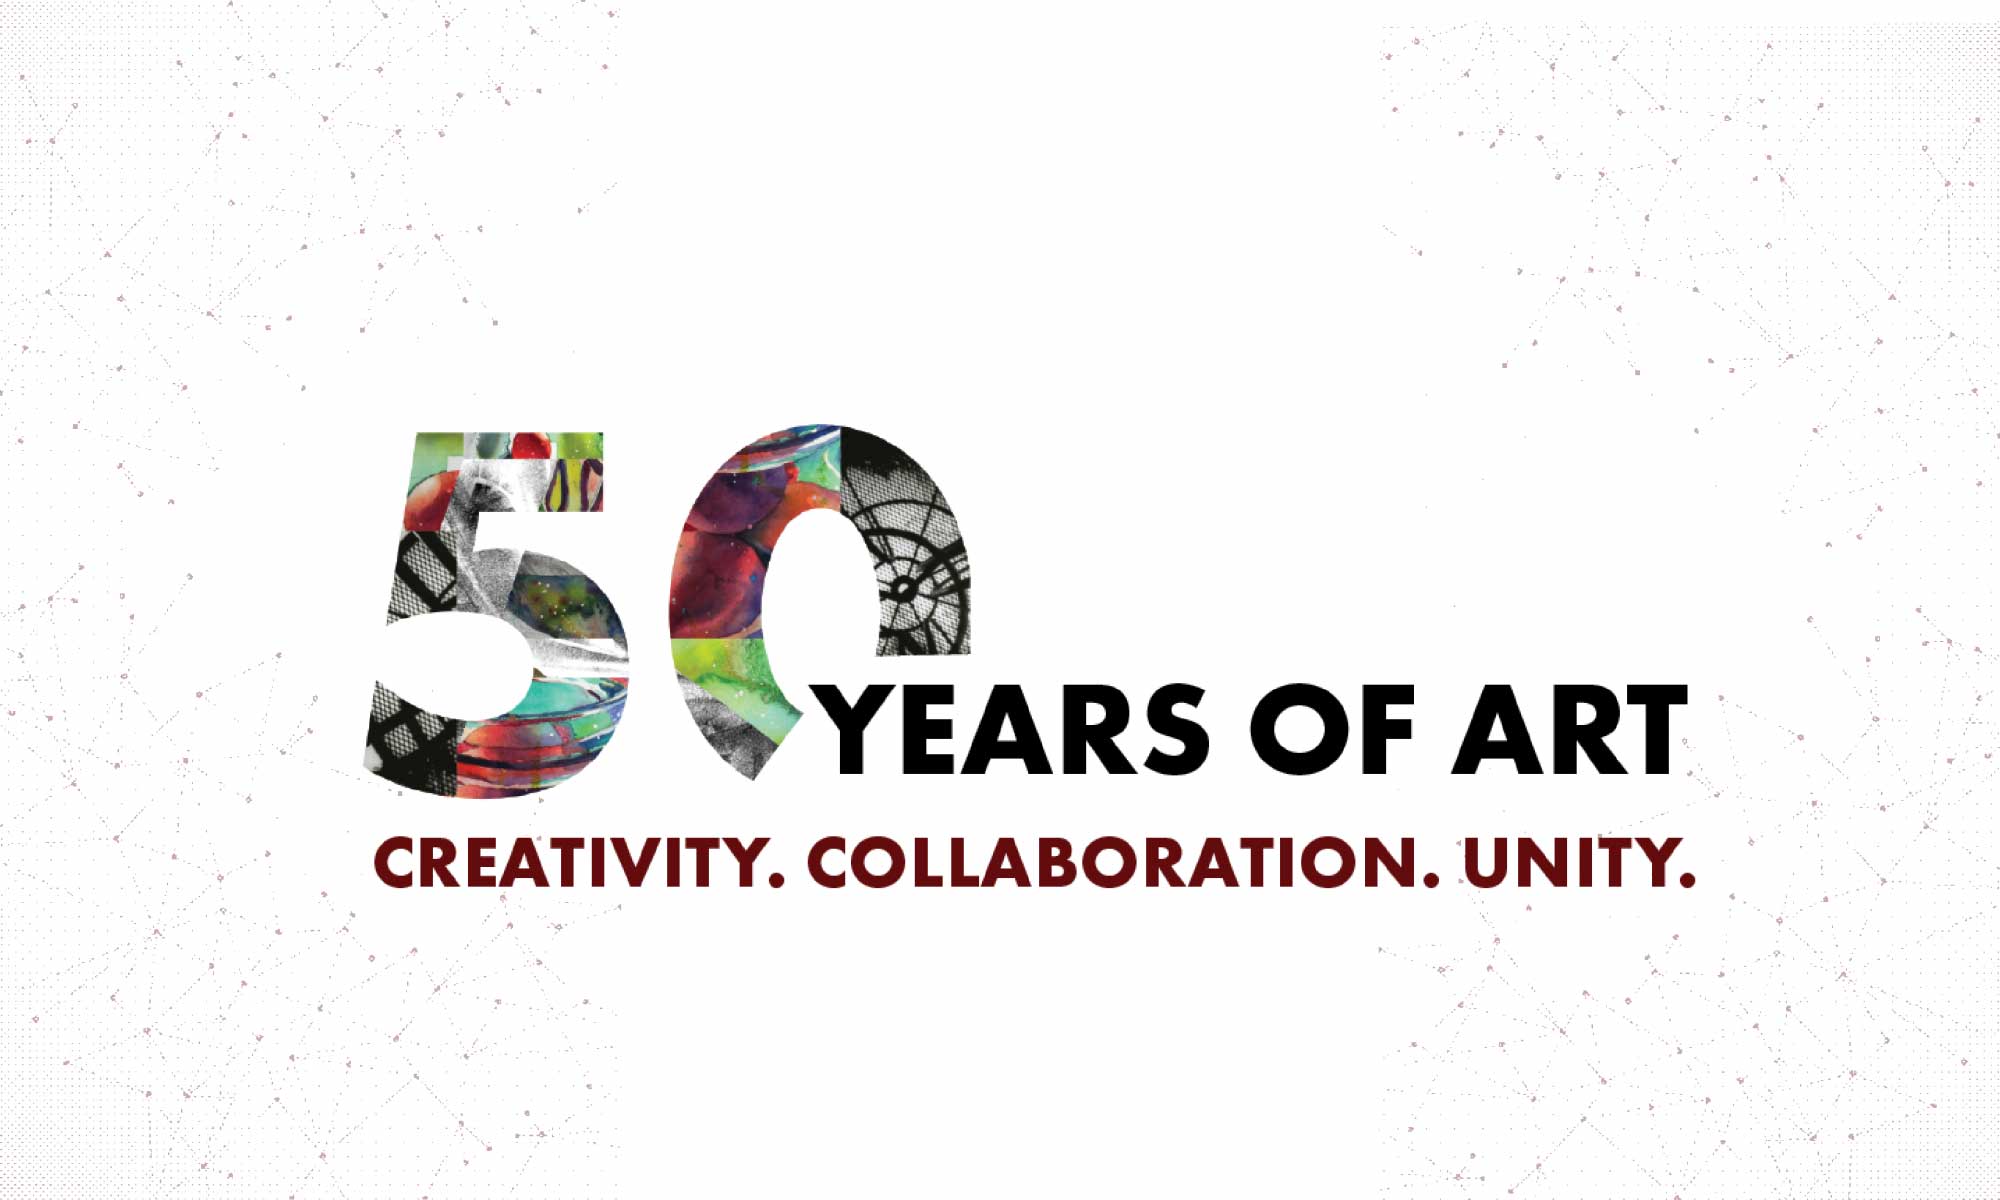 50 Years or Art: Creativity. Collaboration. Unity.